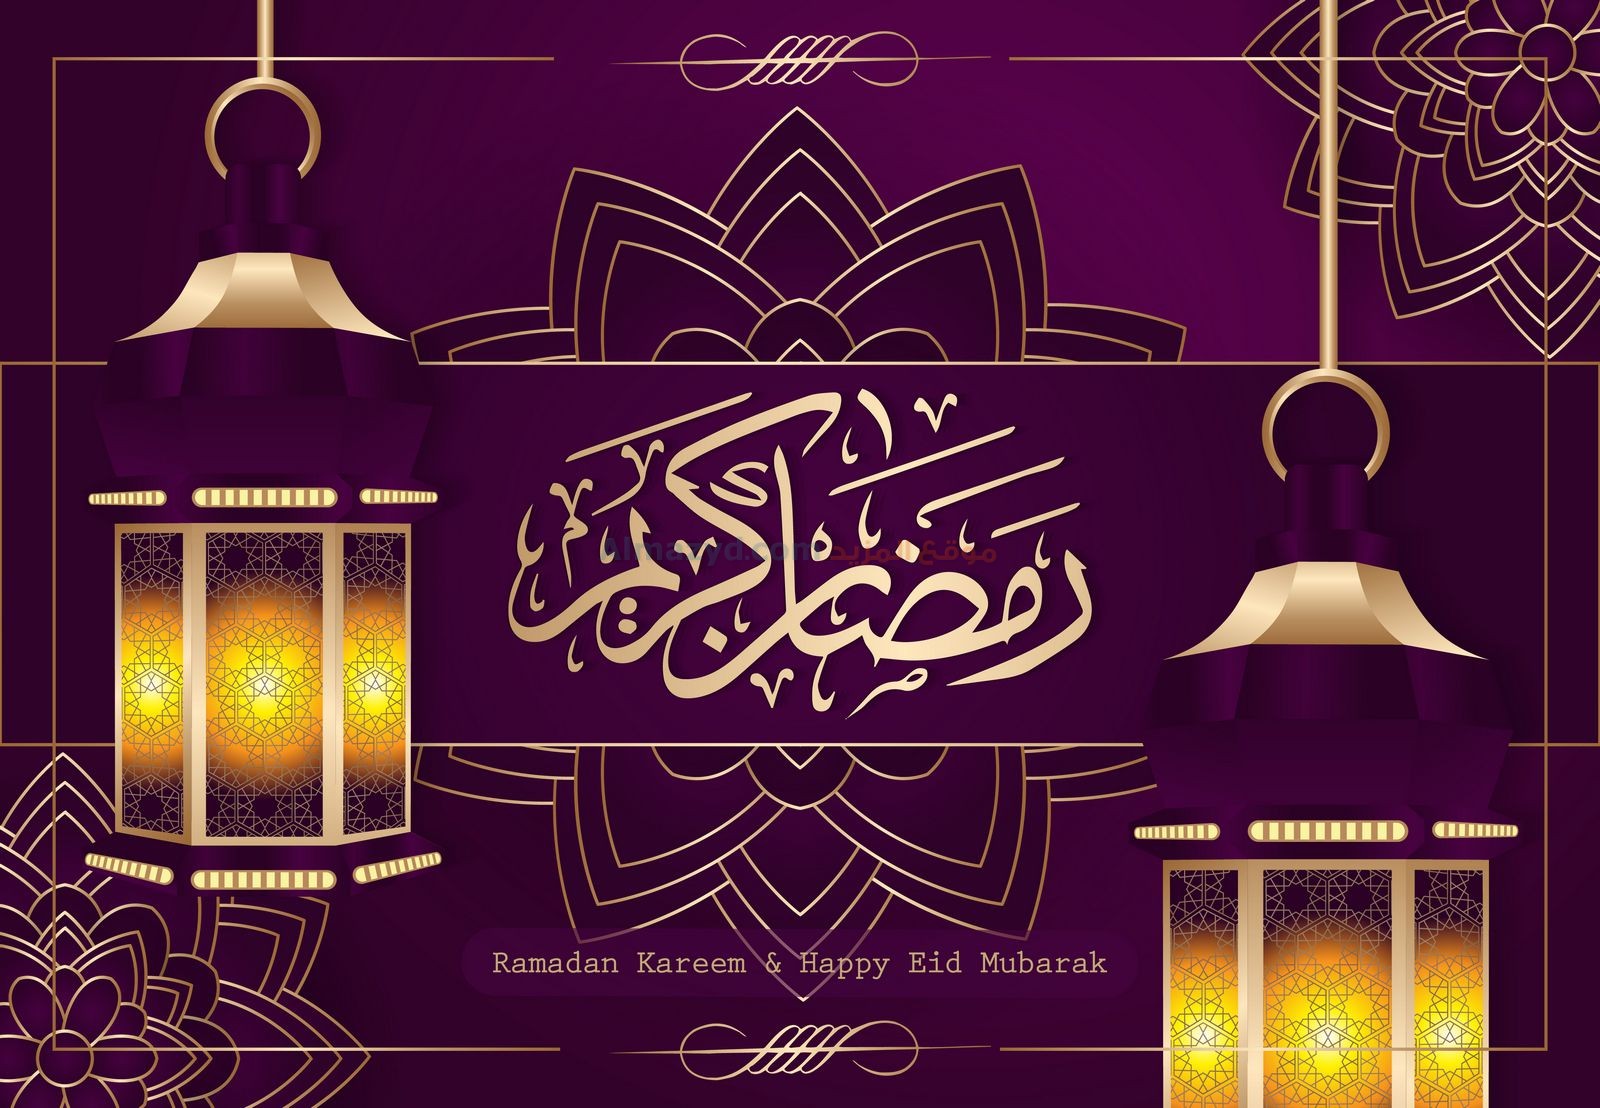 Ramadan-Images-H.jpg